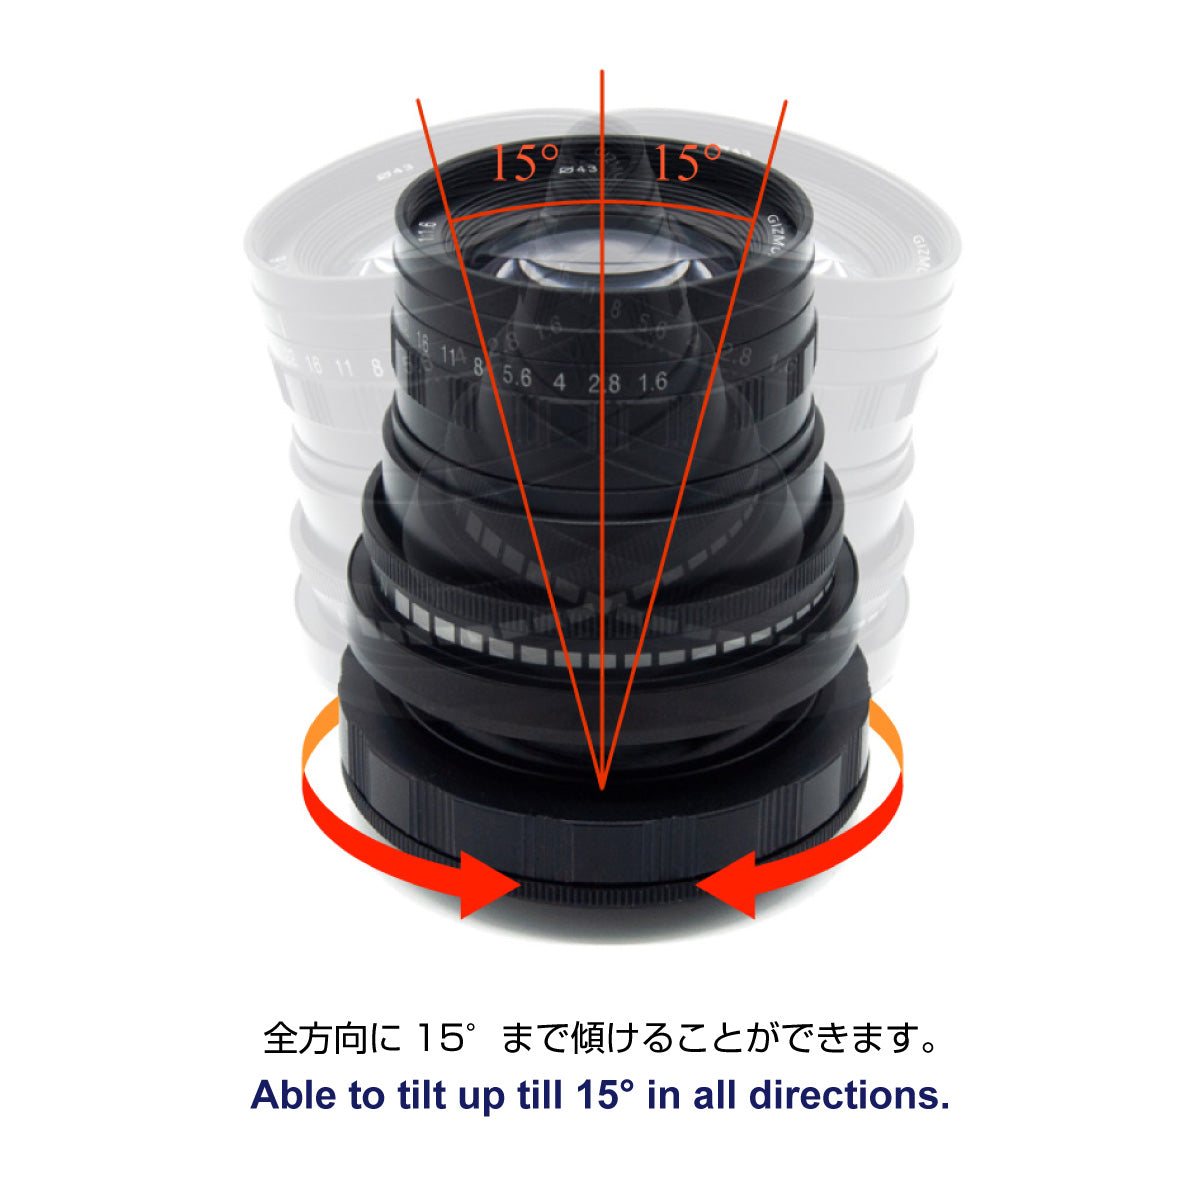 GIZMON Miniature Tilt Lens 50mm Xマウント